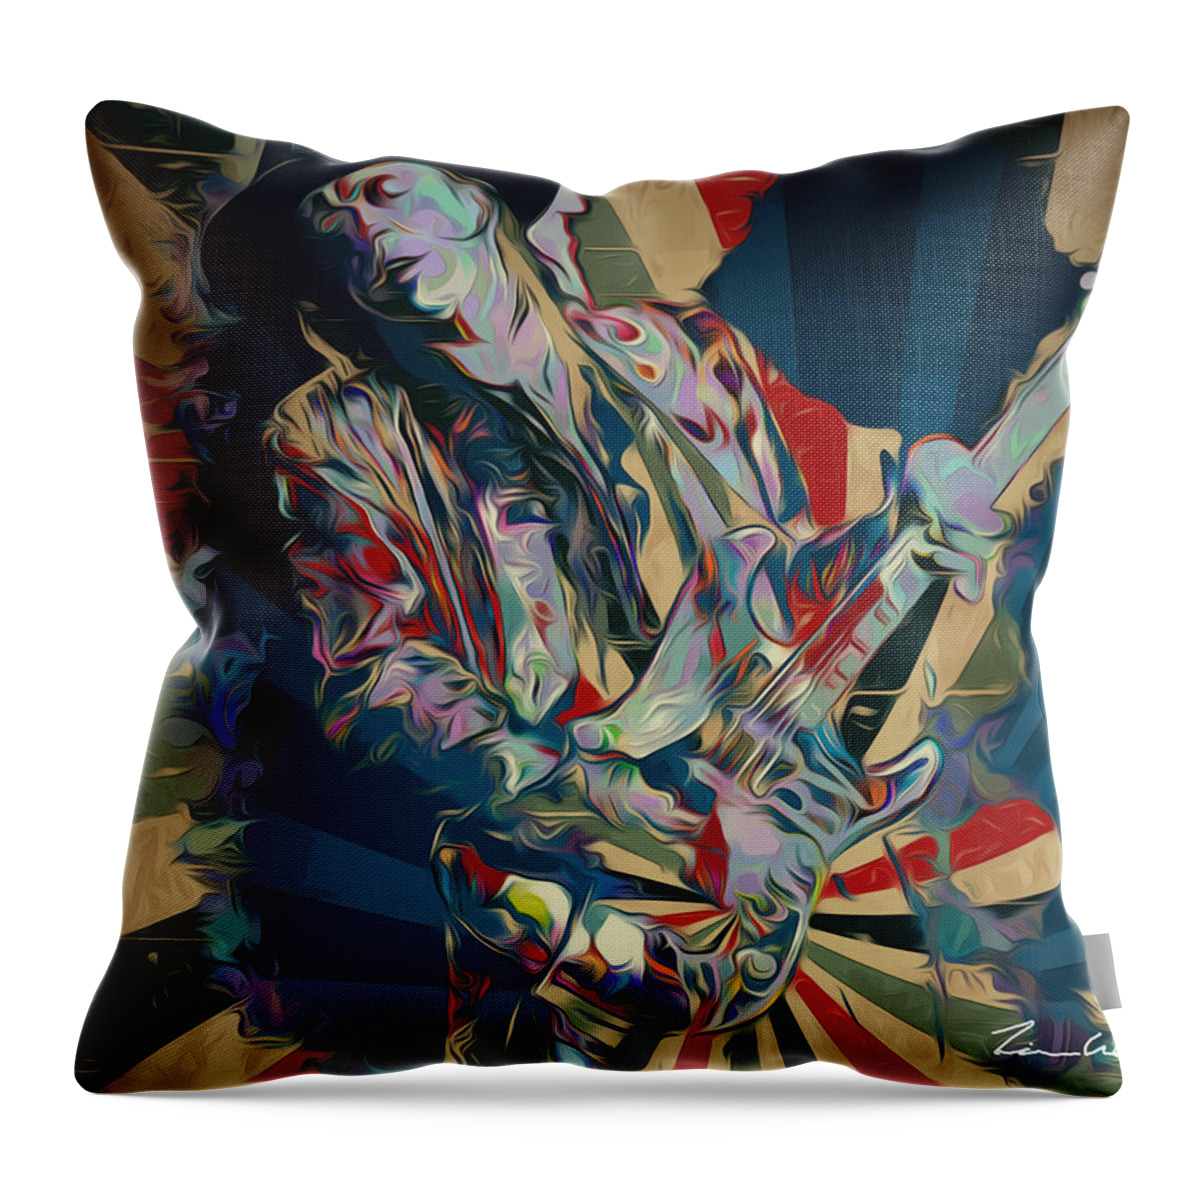 Stevie Ray Vaughn Throw Pillow featuring the digital art Stevie Ray Vaughn by Tim Wemple